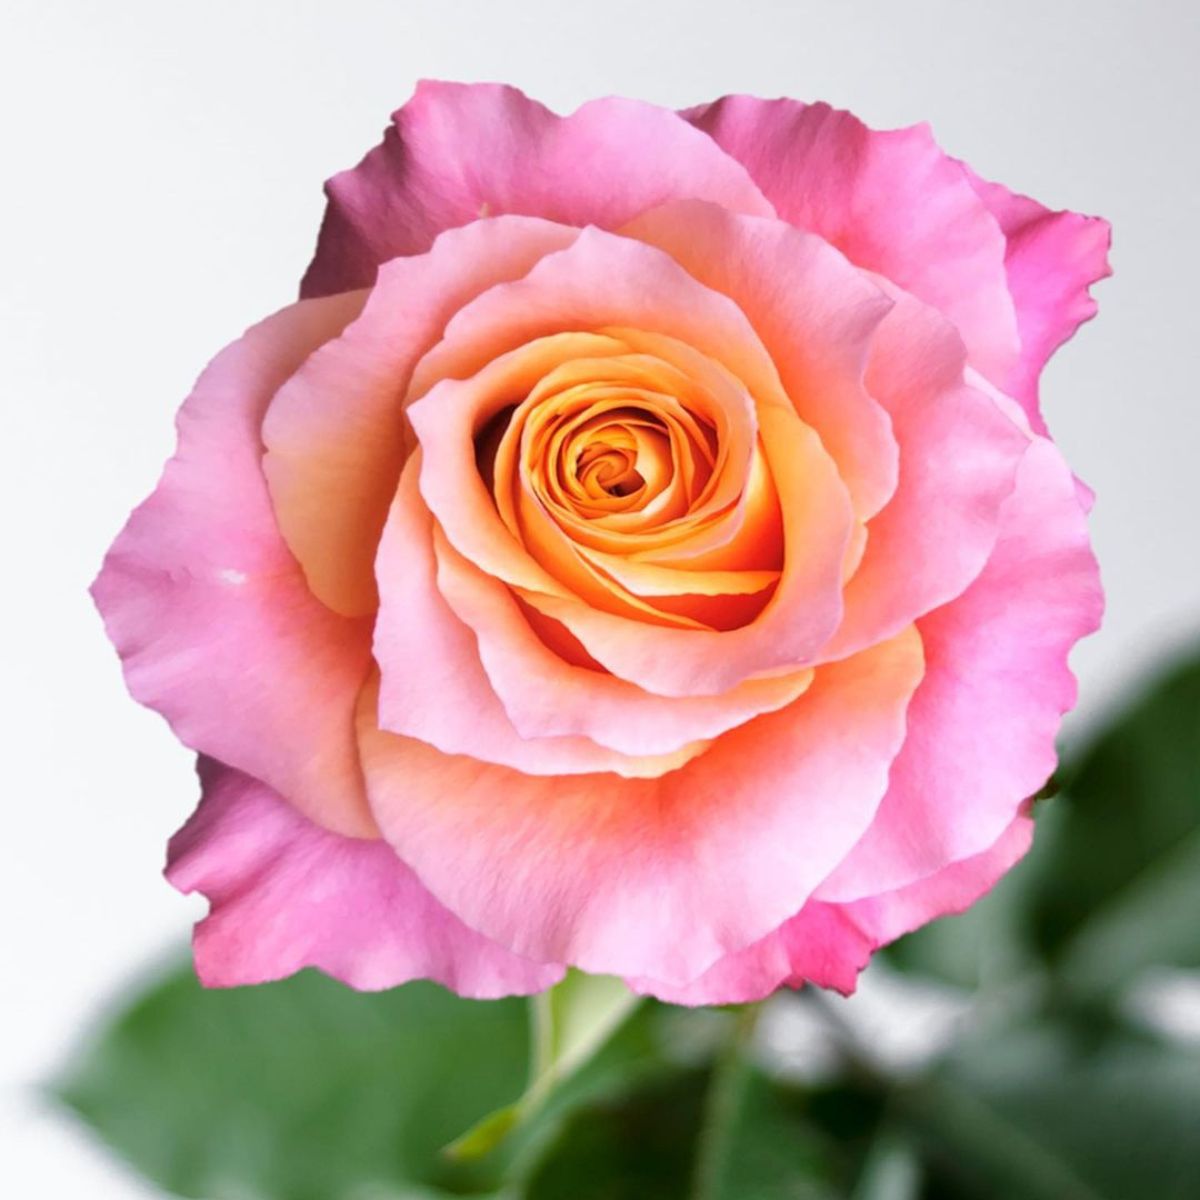 The spectacular rose Free Spirit in full bloom